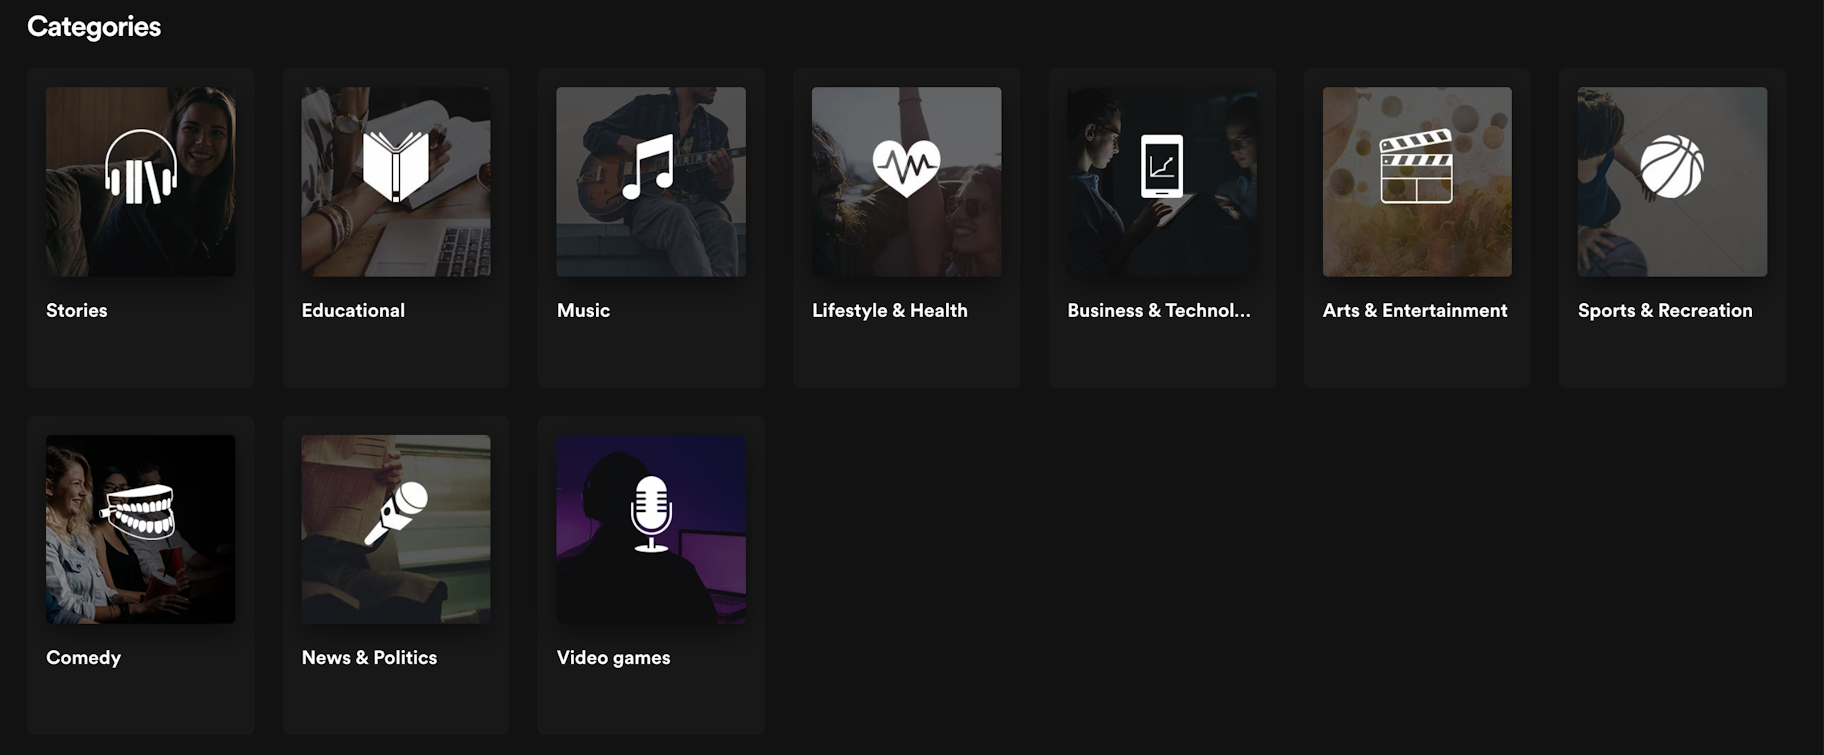 Principales catégories de podcasts de Spotify